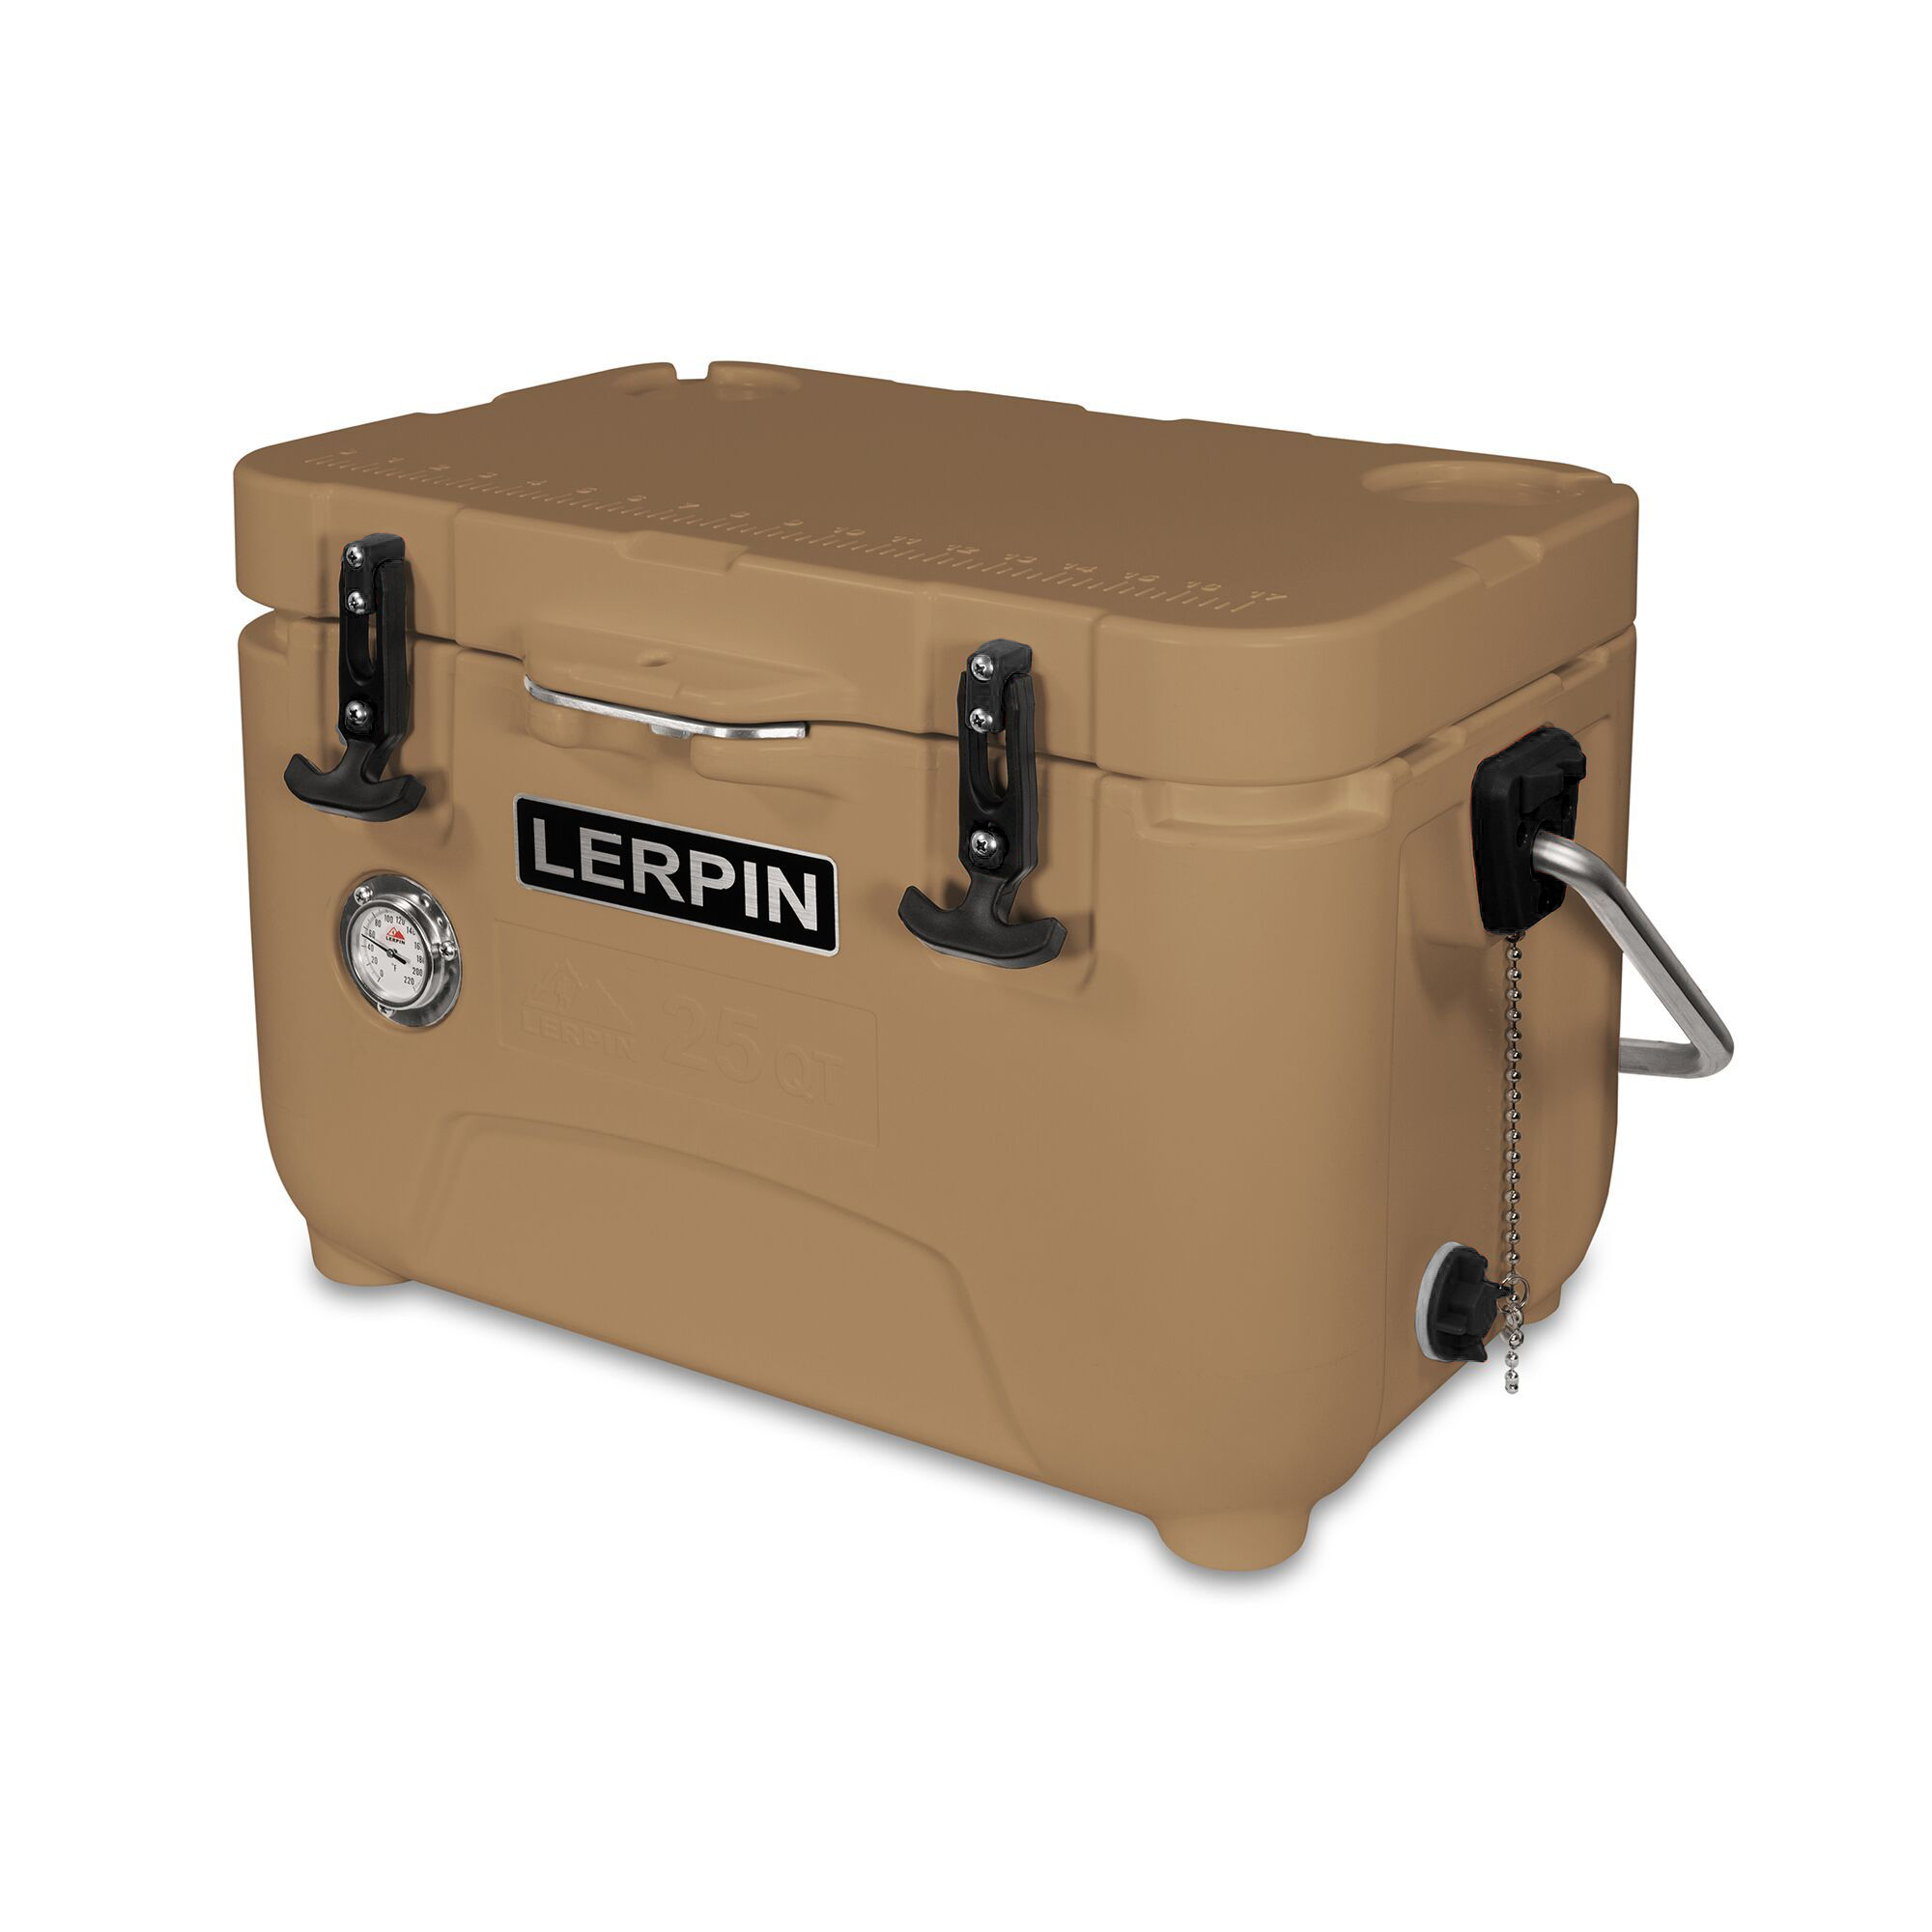 Lerpin Outdoor Rotomolded Ice Chest Cooler Box Camping Cooler Mini Fridge